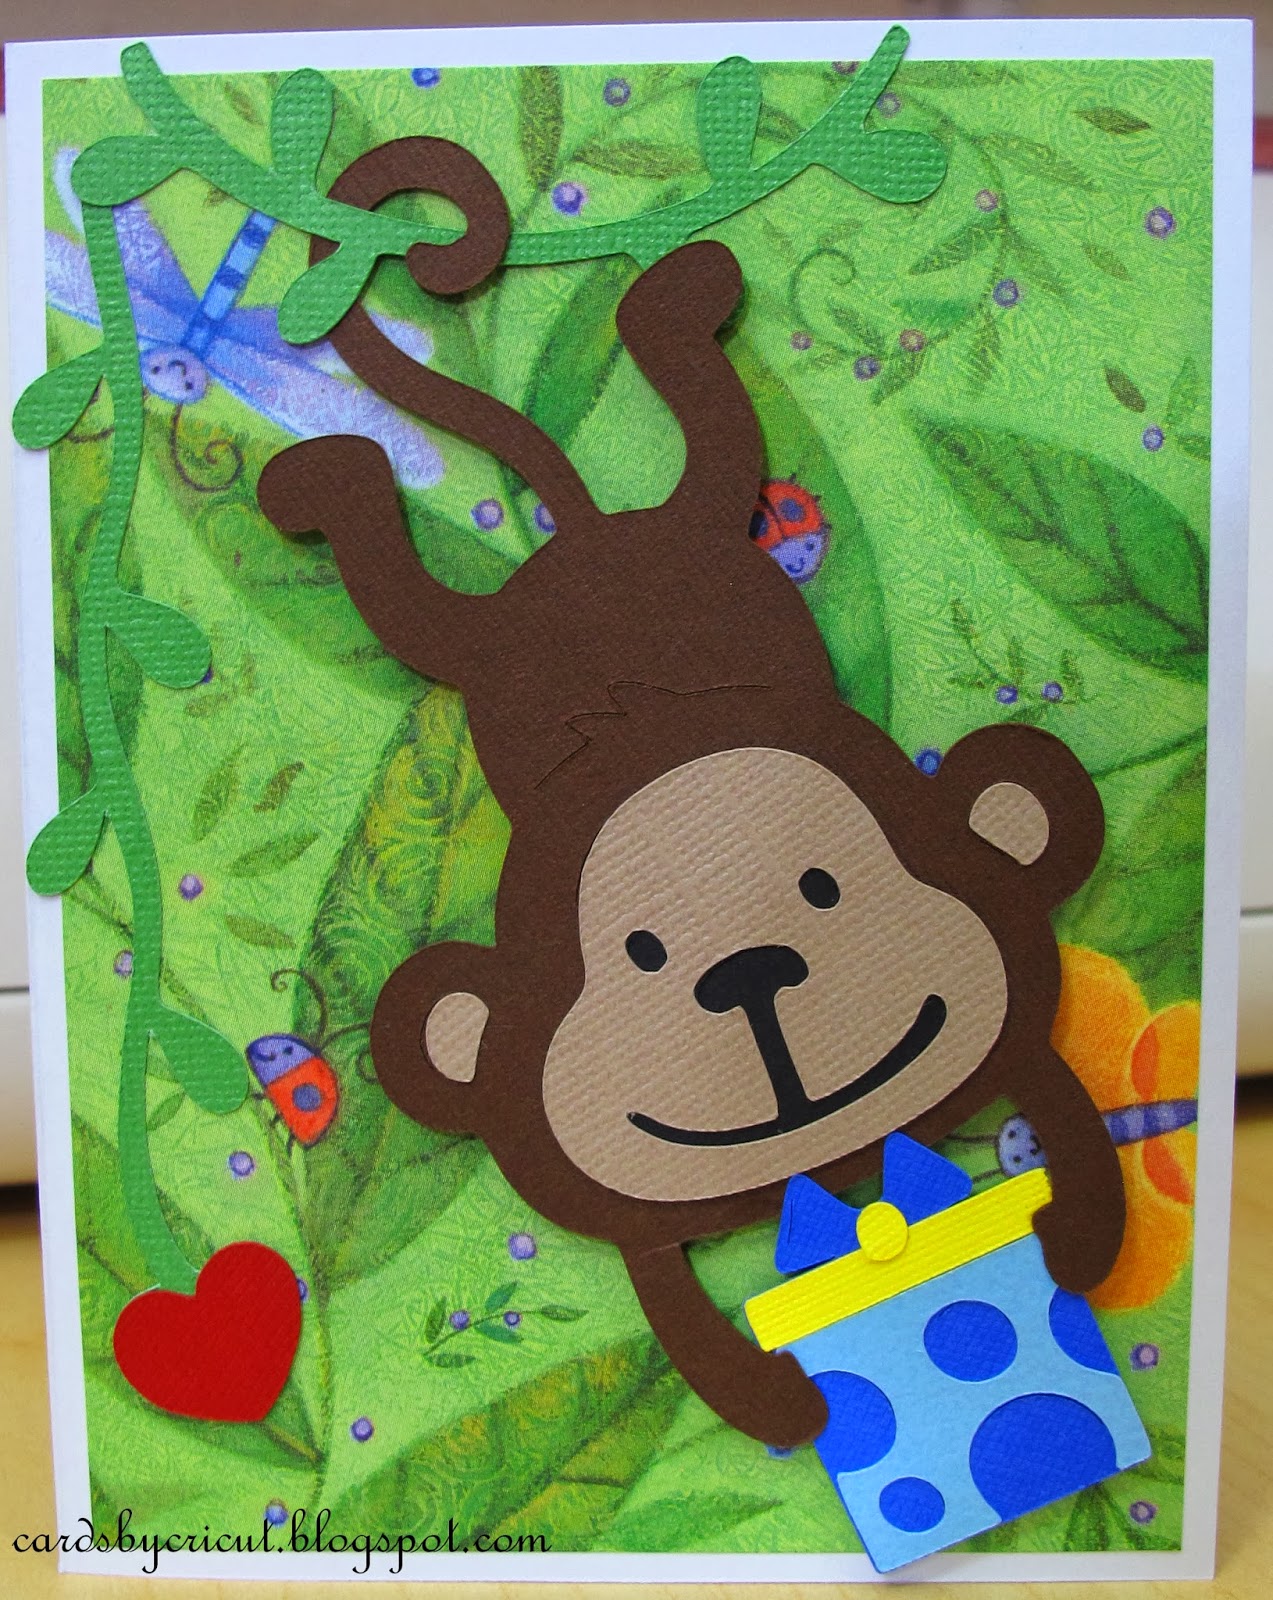 Cards By Cricut: Monkey Birthday Card